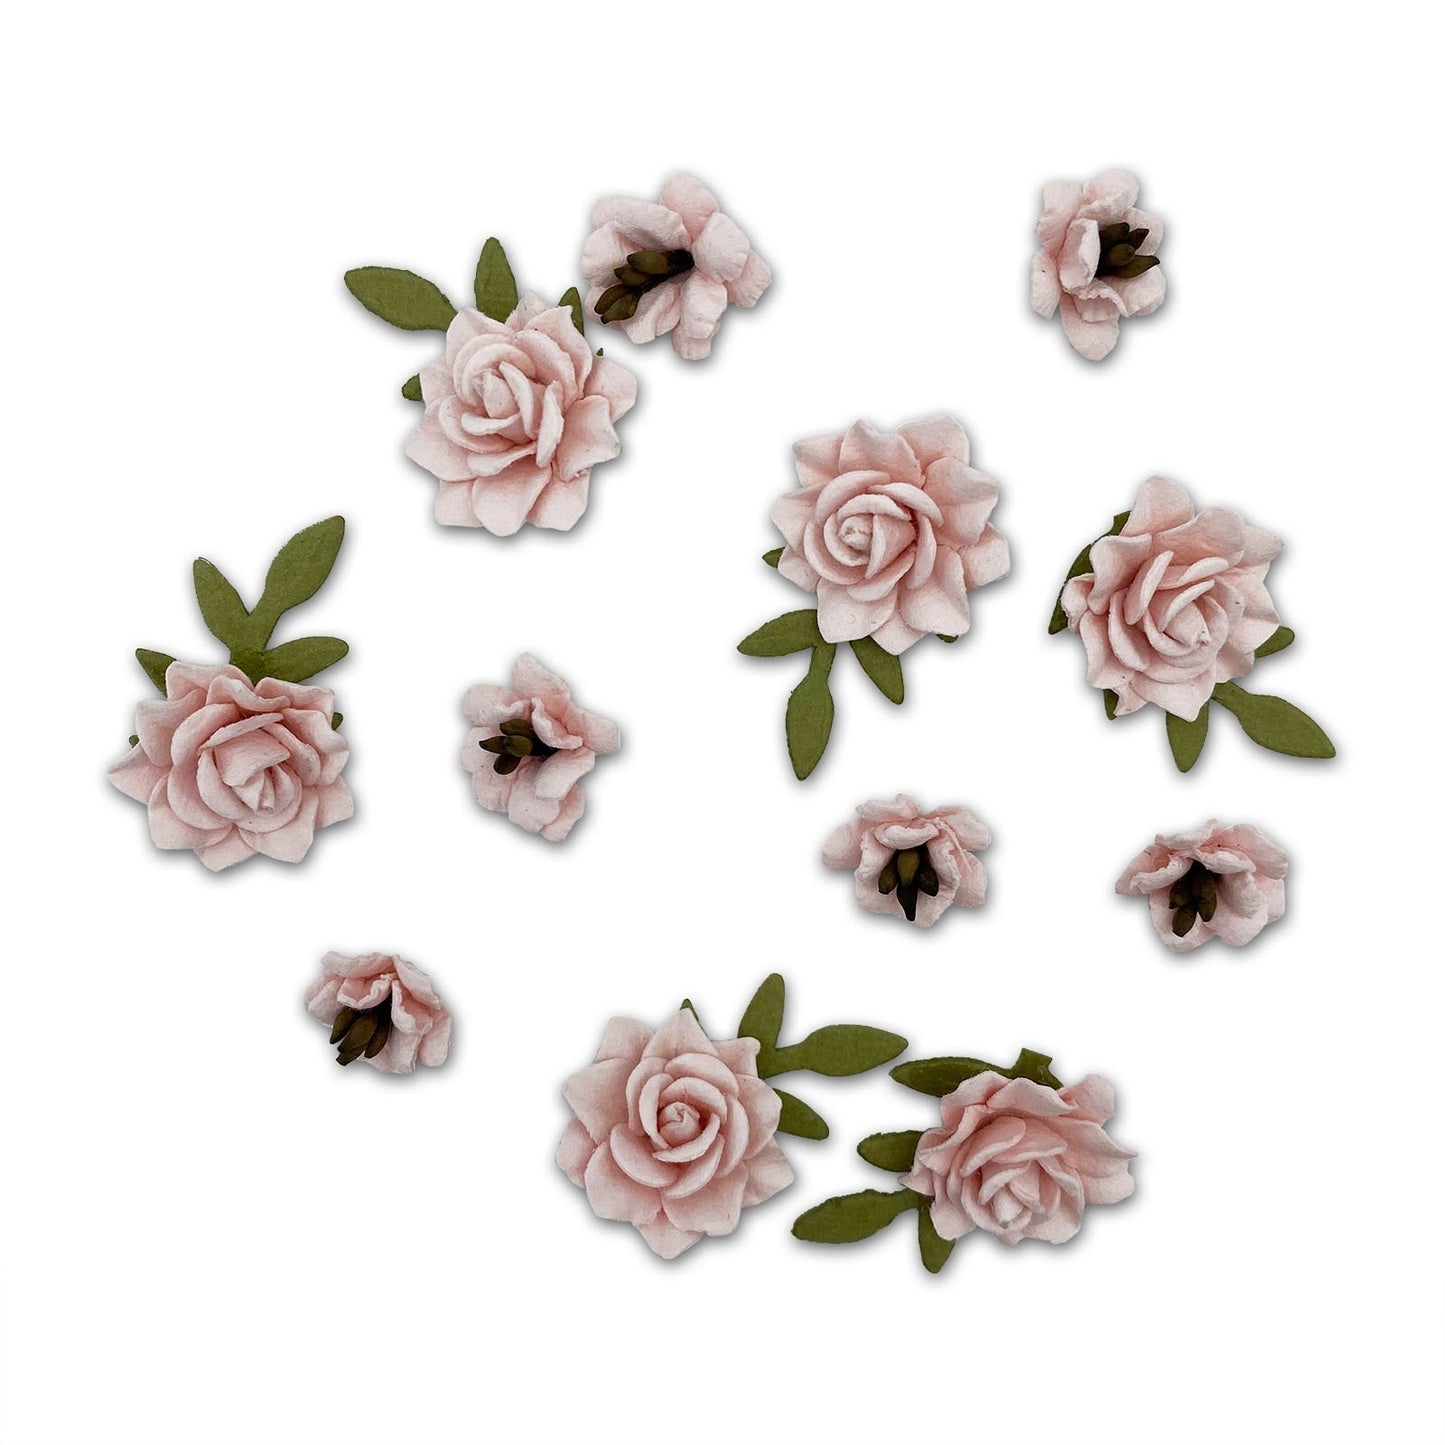 49 and  Market Handmade Paper Flowers - Florets - Taffy